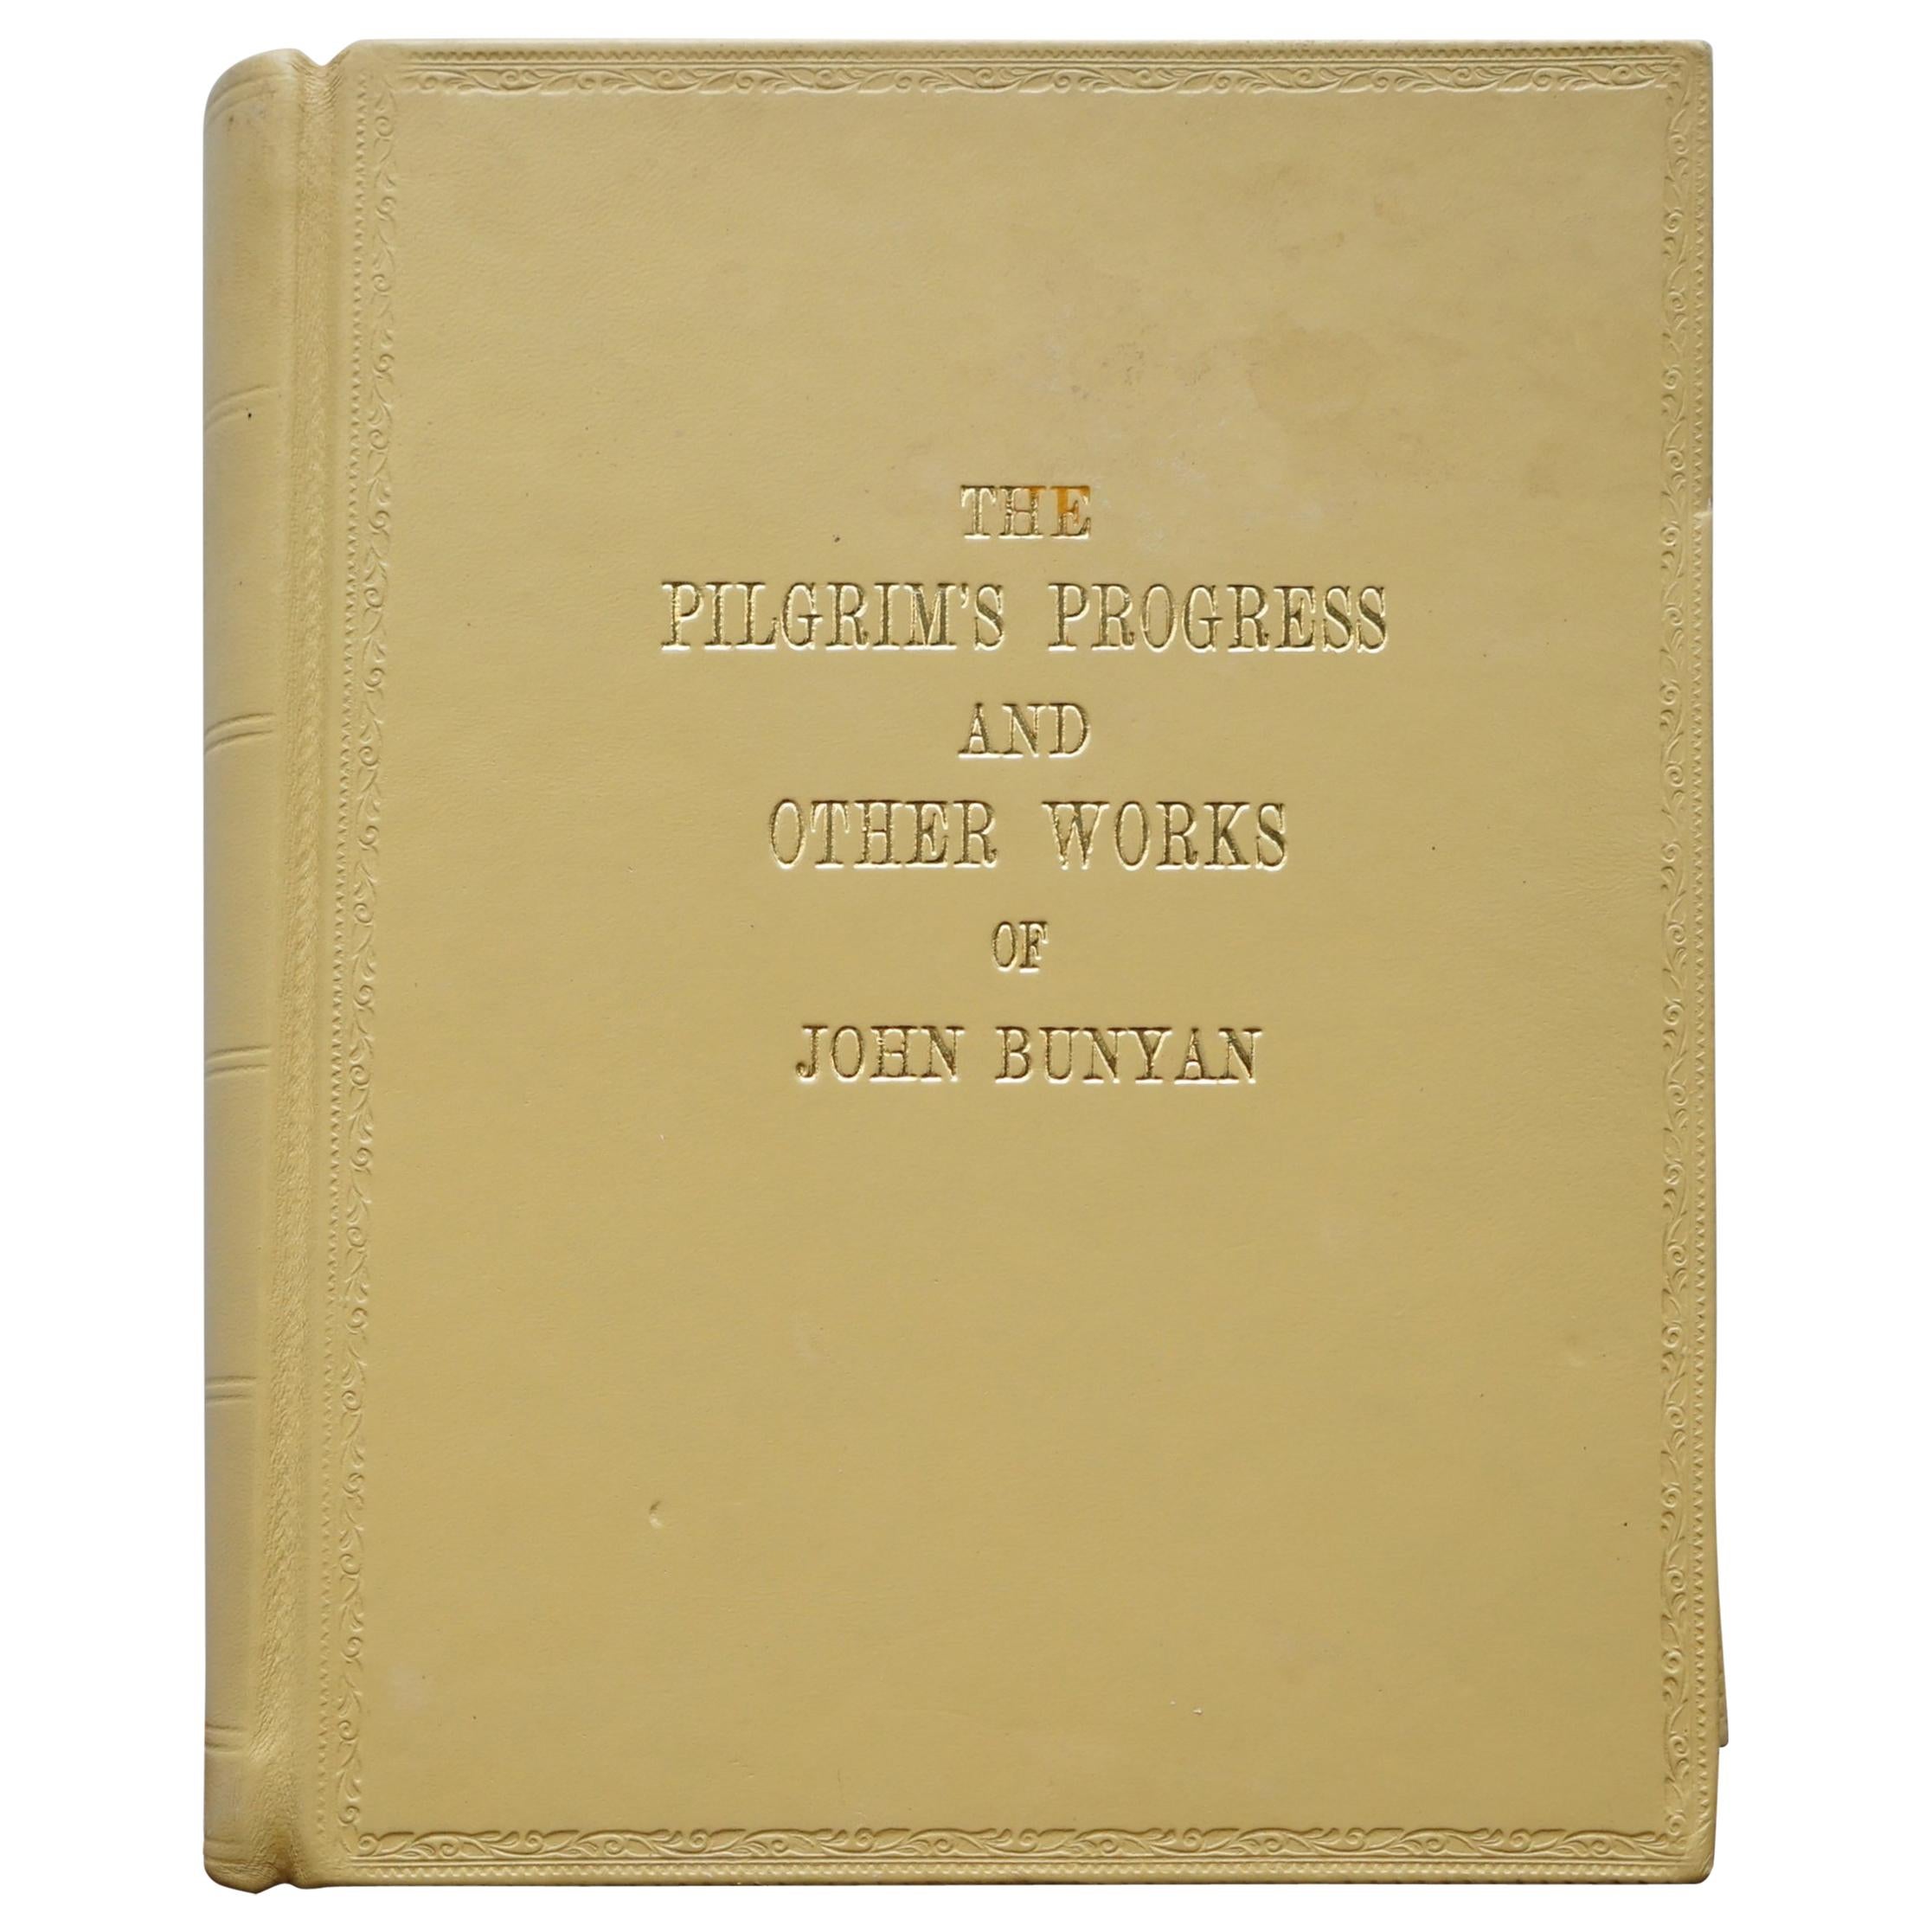 Rare 1872 Edition of the Pilgrim's Progress and Other Works of John Bunyan